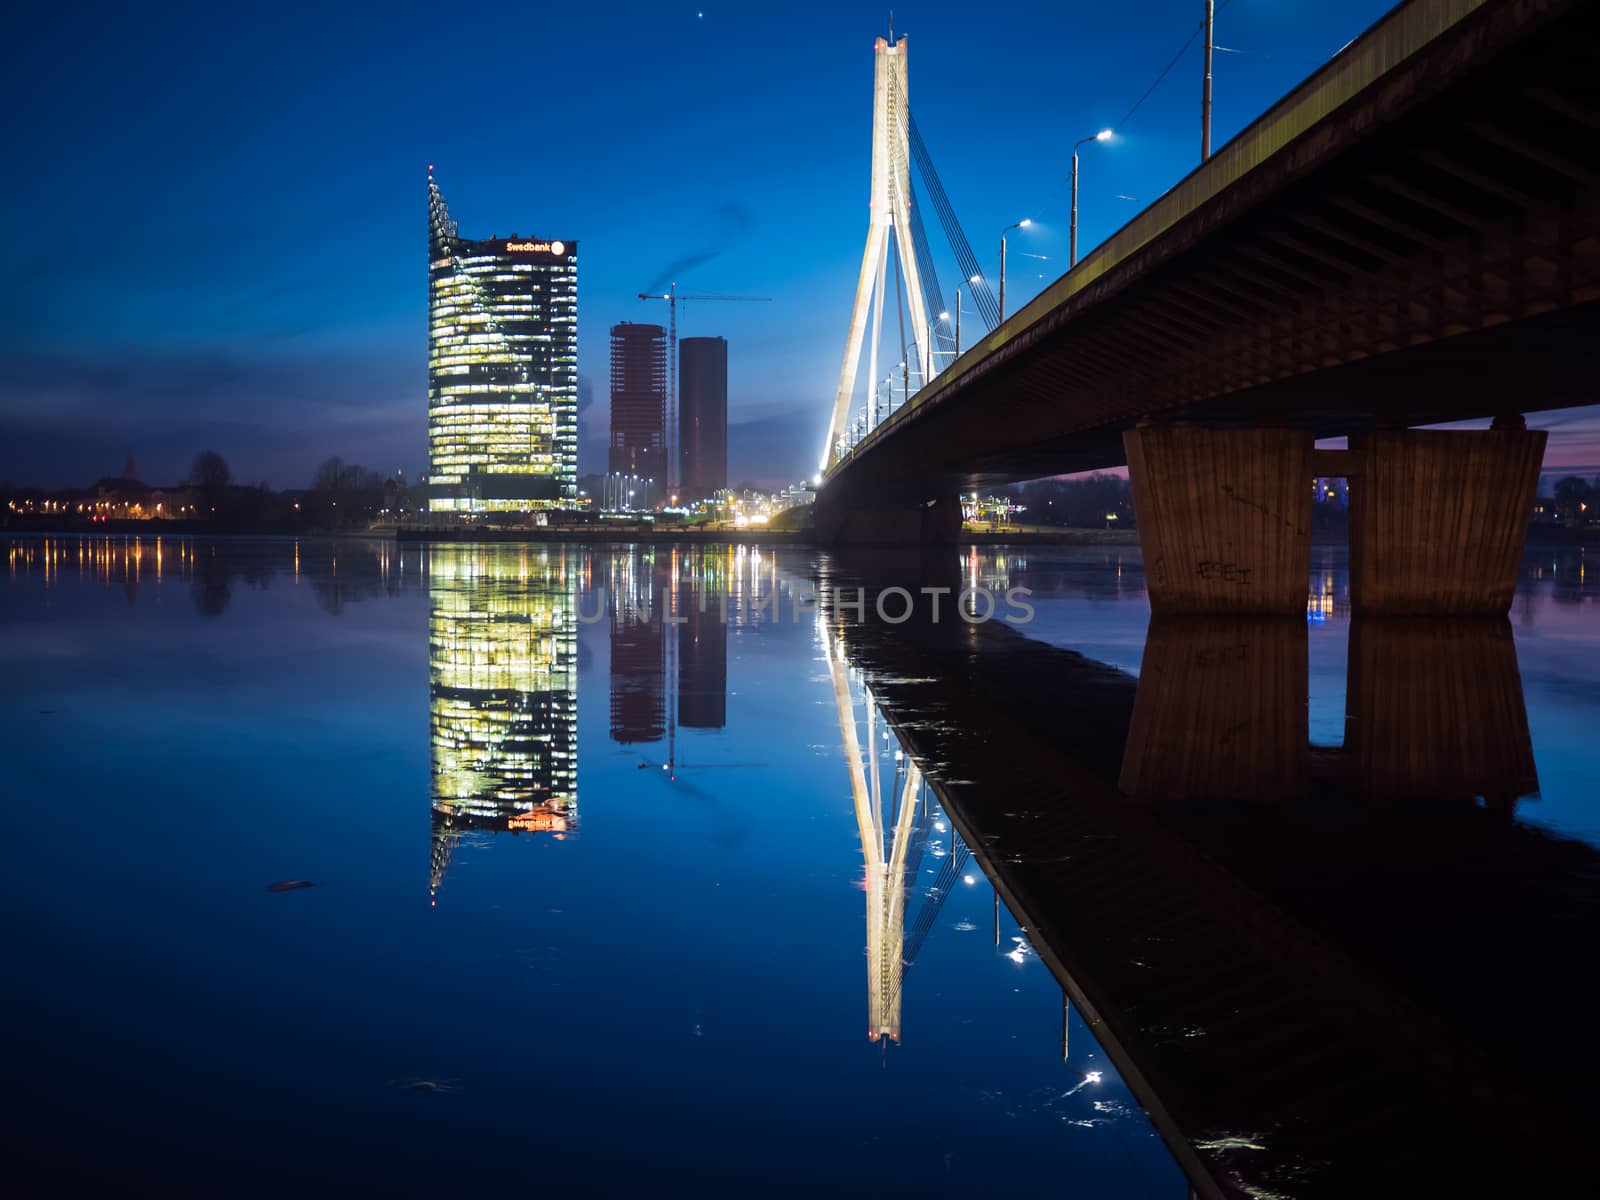 View of Riga river and Vansu Bridge in evening